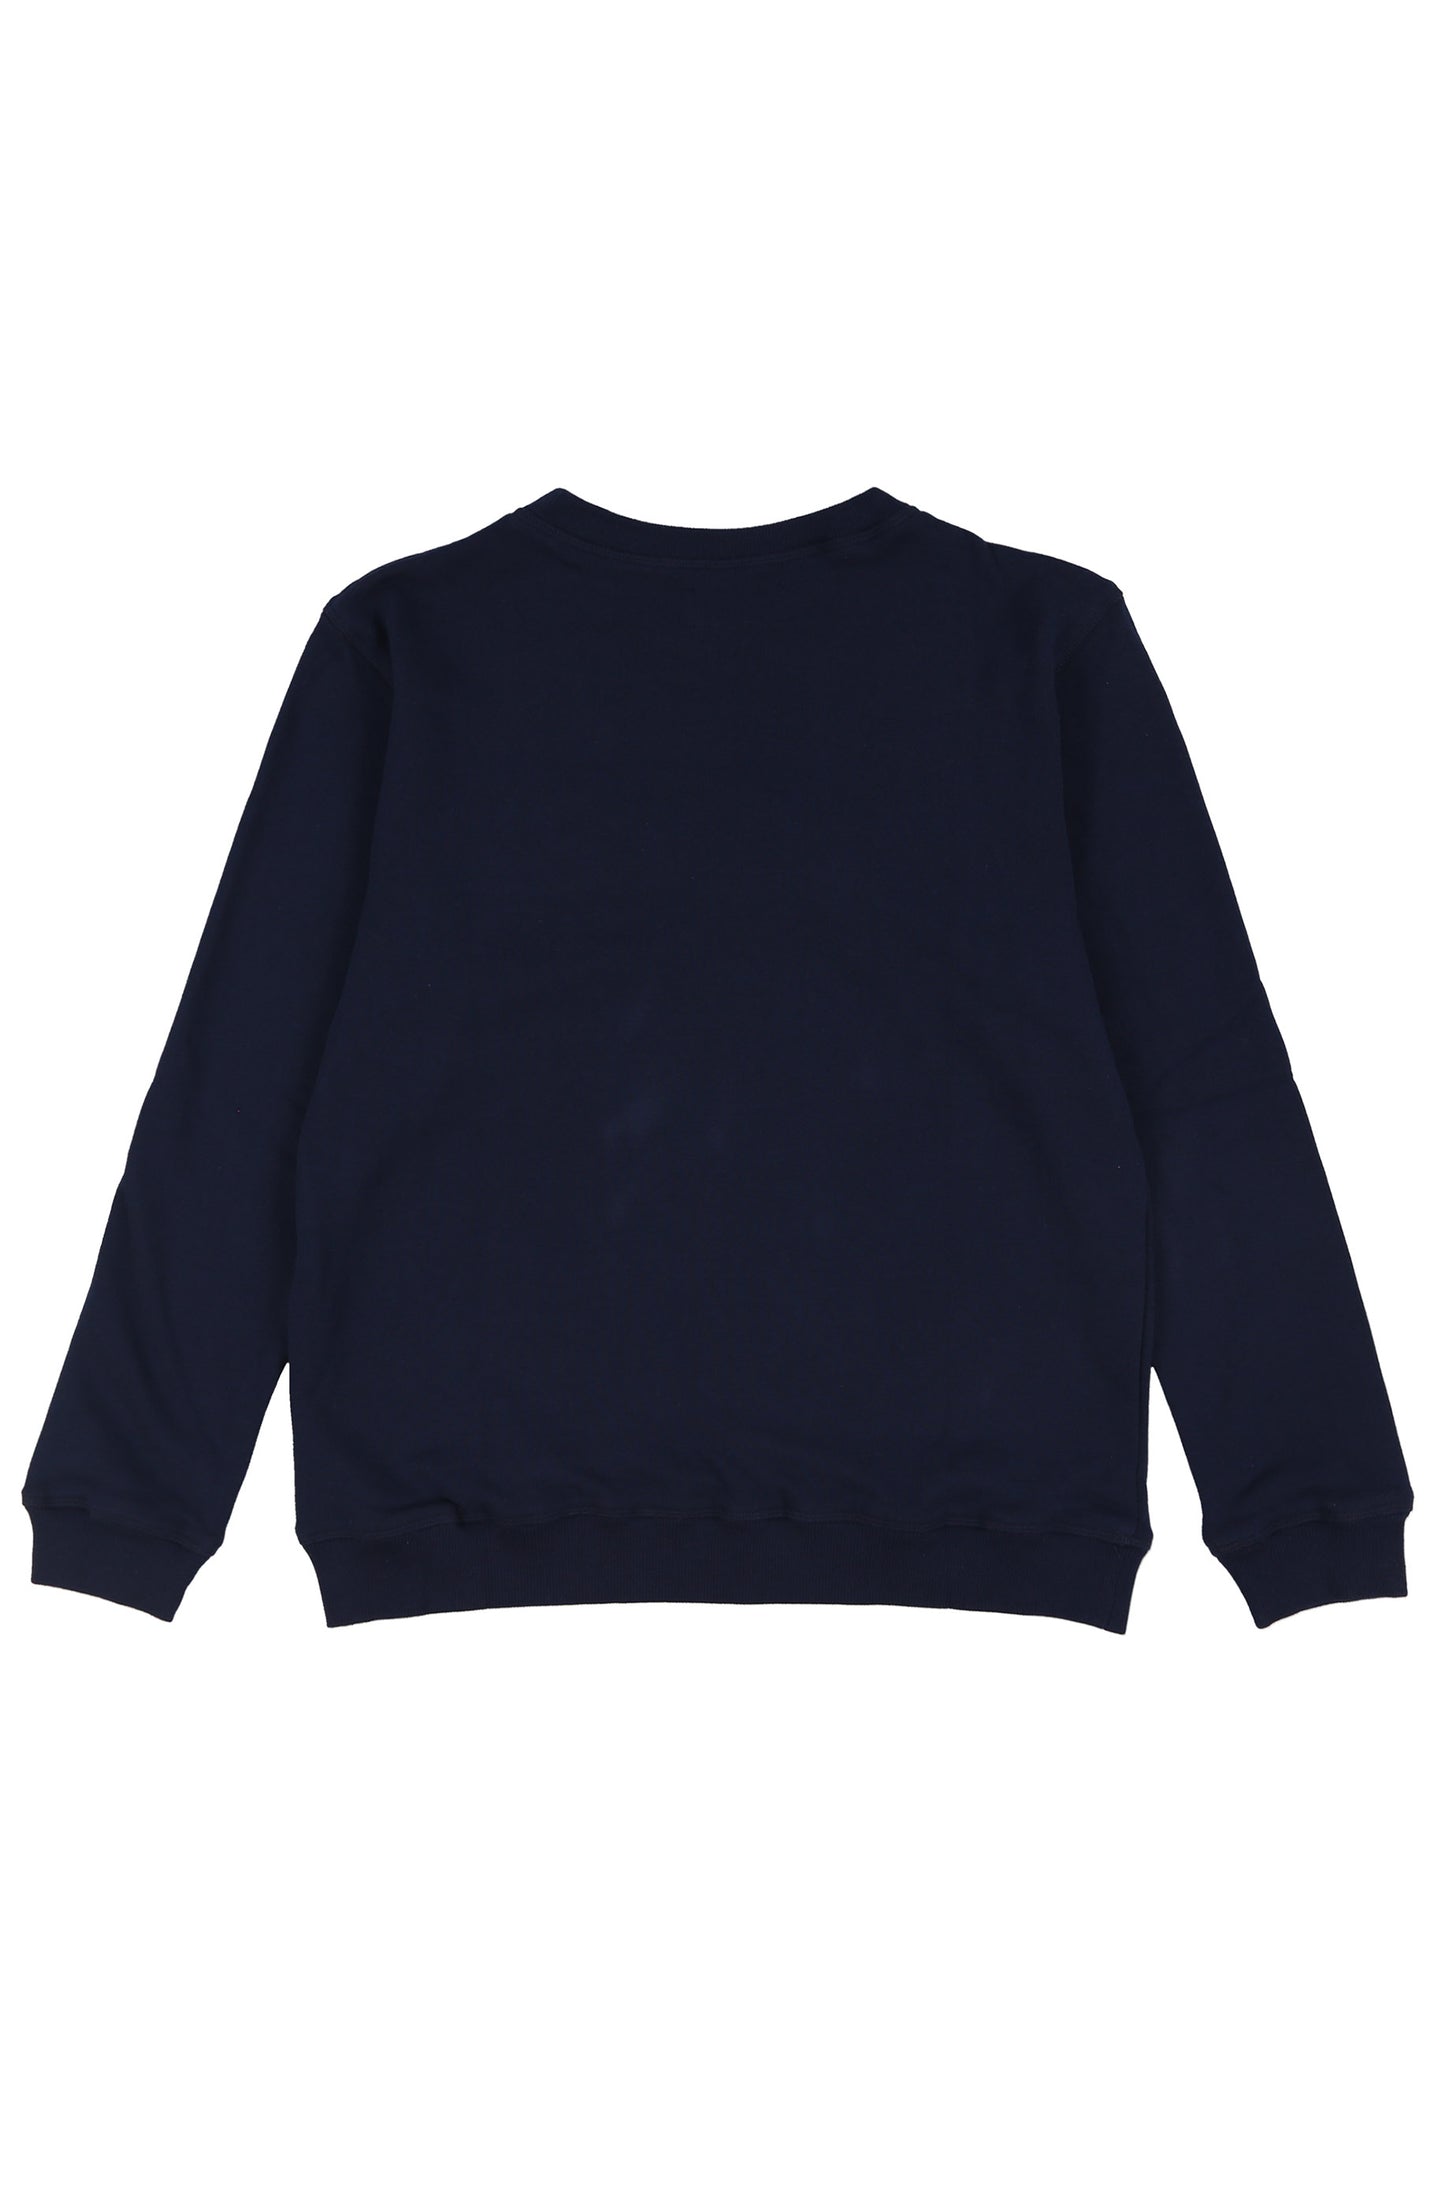 I Oyster logo chenille crewneck sweatshirt ( navy )